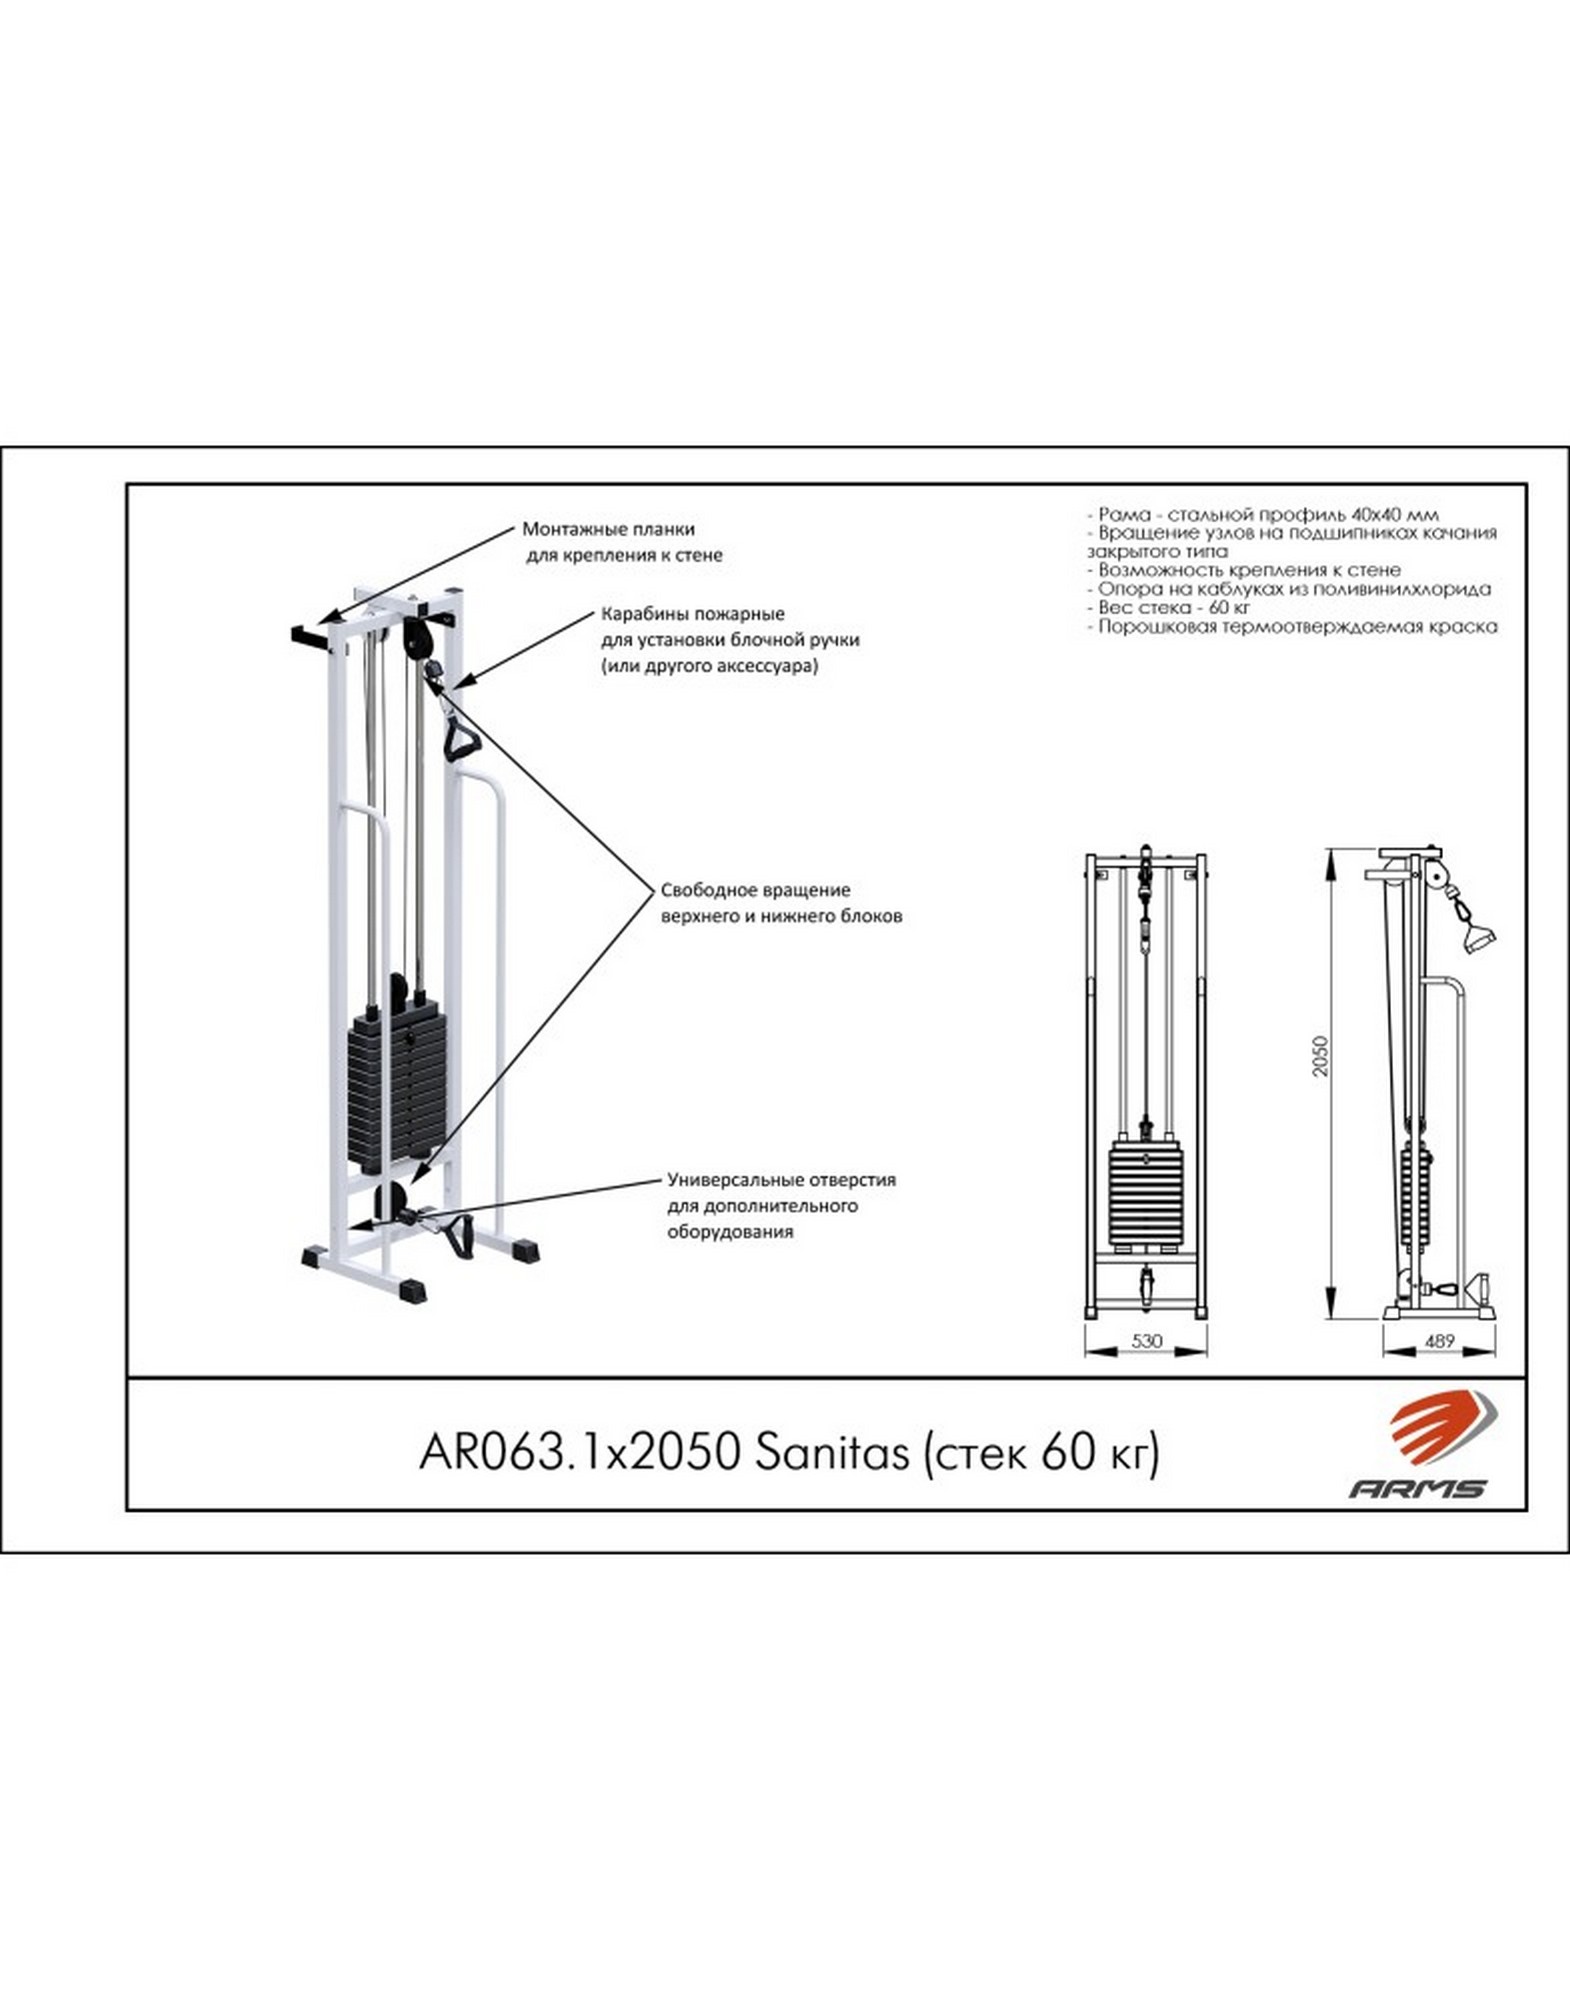 Тренажер ARMS Sanitas (стек 60 кг) AR063.1х2050 1570_2000